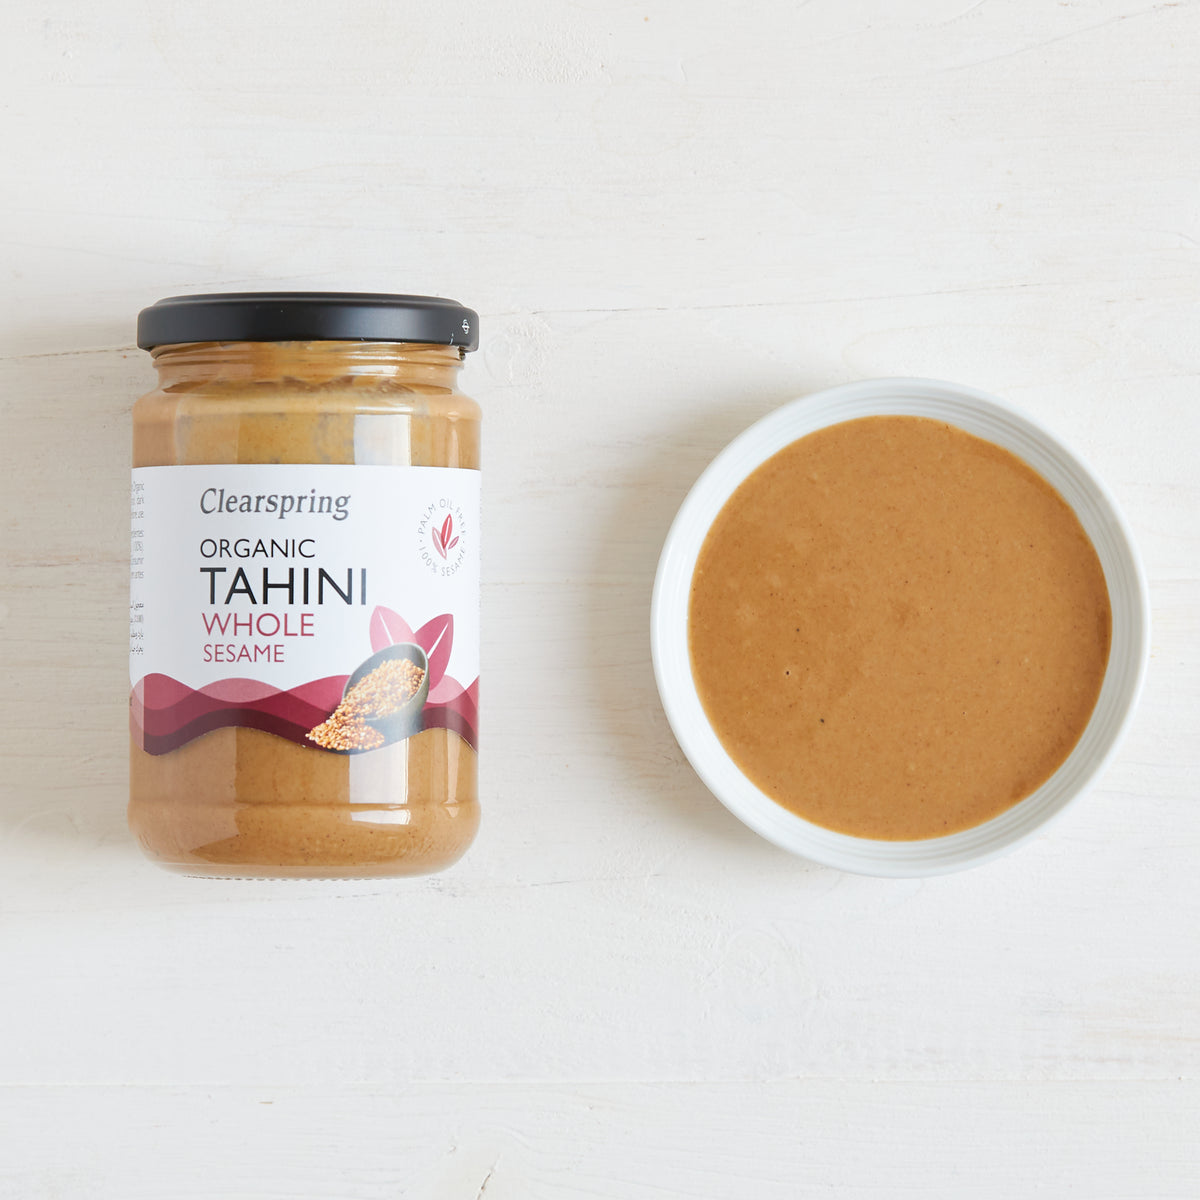 Clearspring Organic Tahini - Whole Sesame